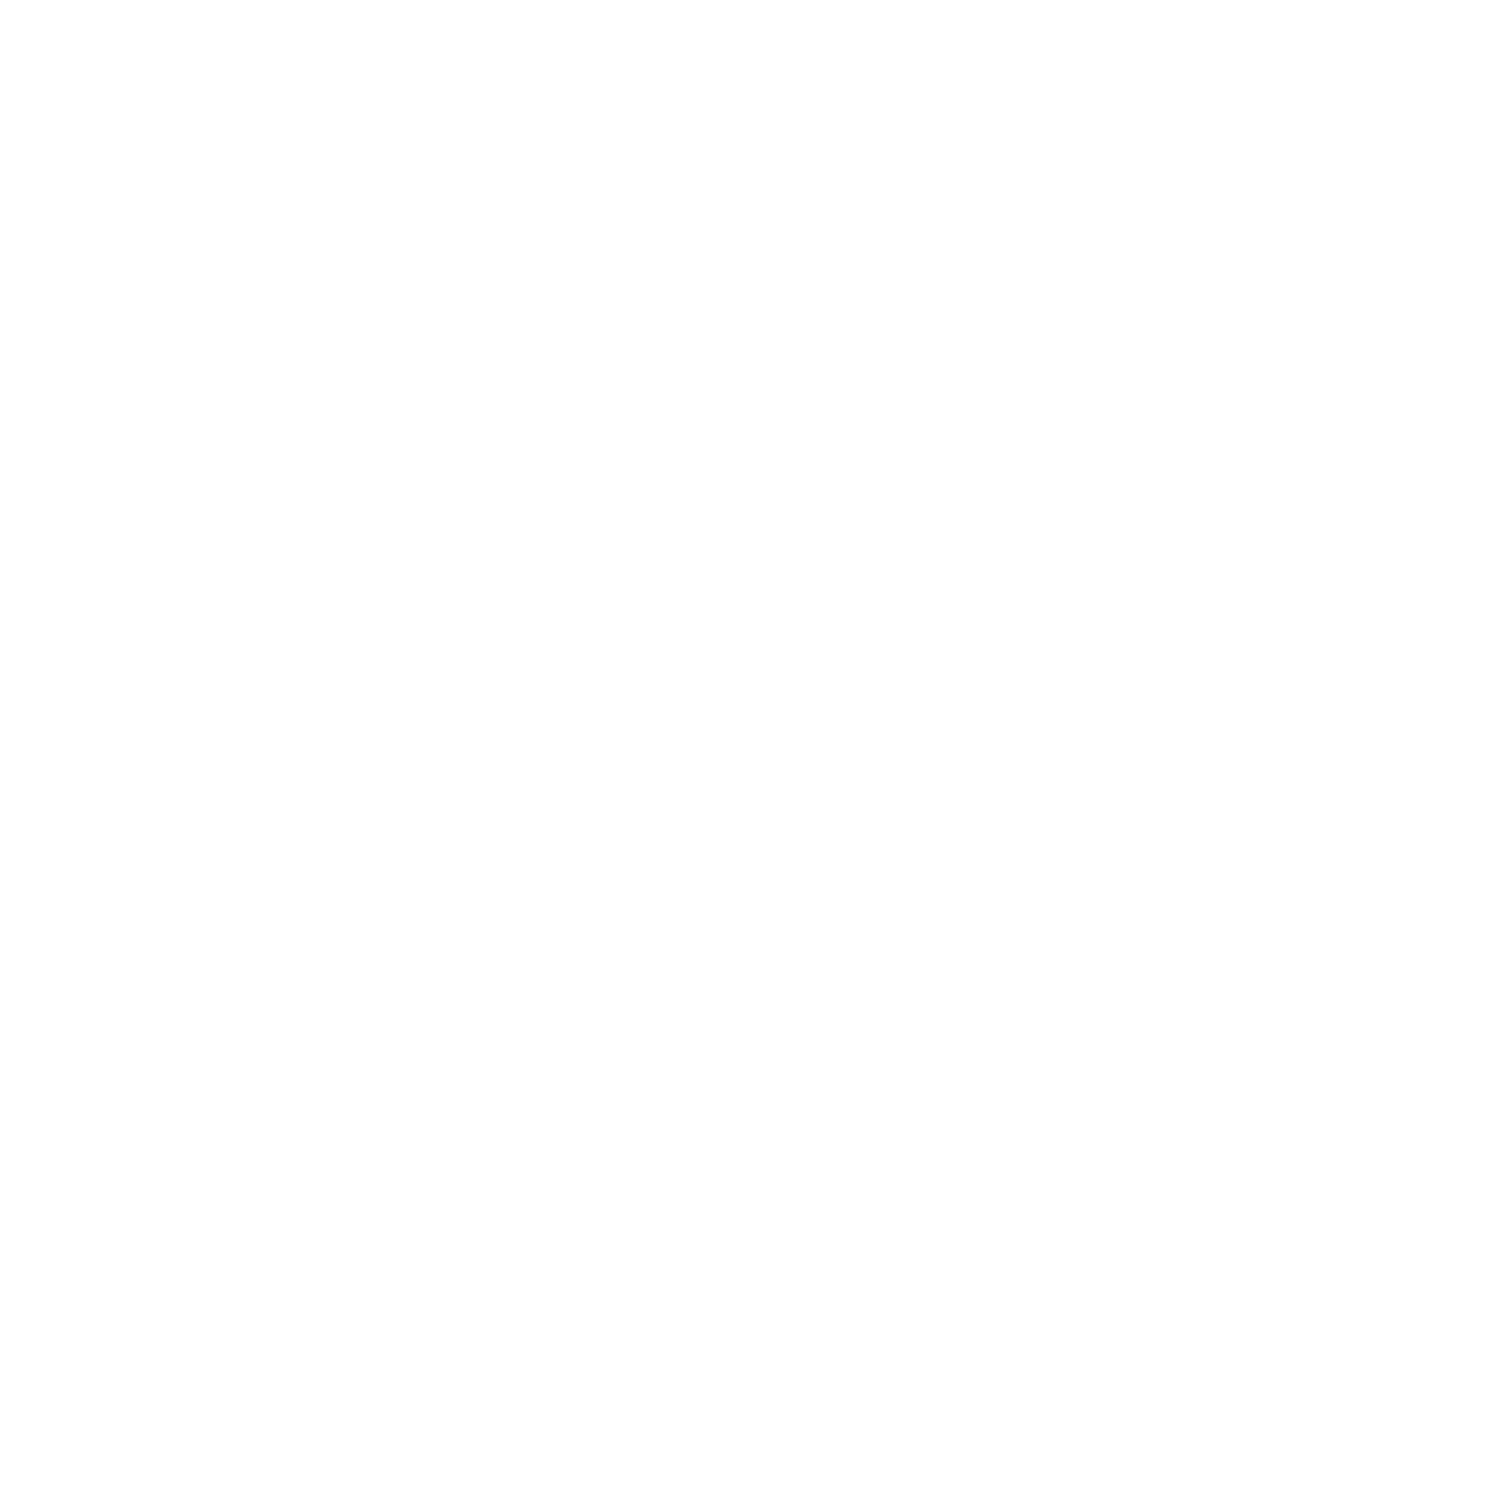 Lynsie Steinley Christian Coaching